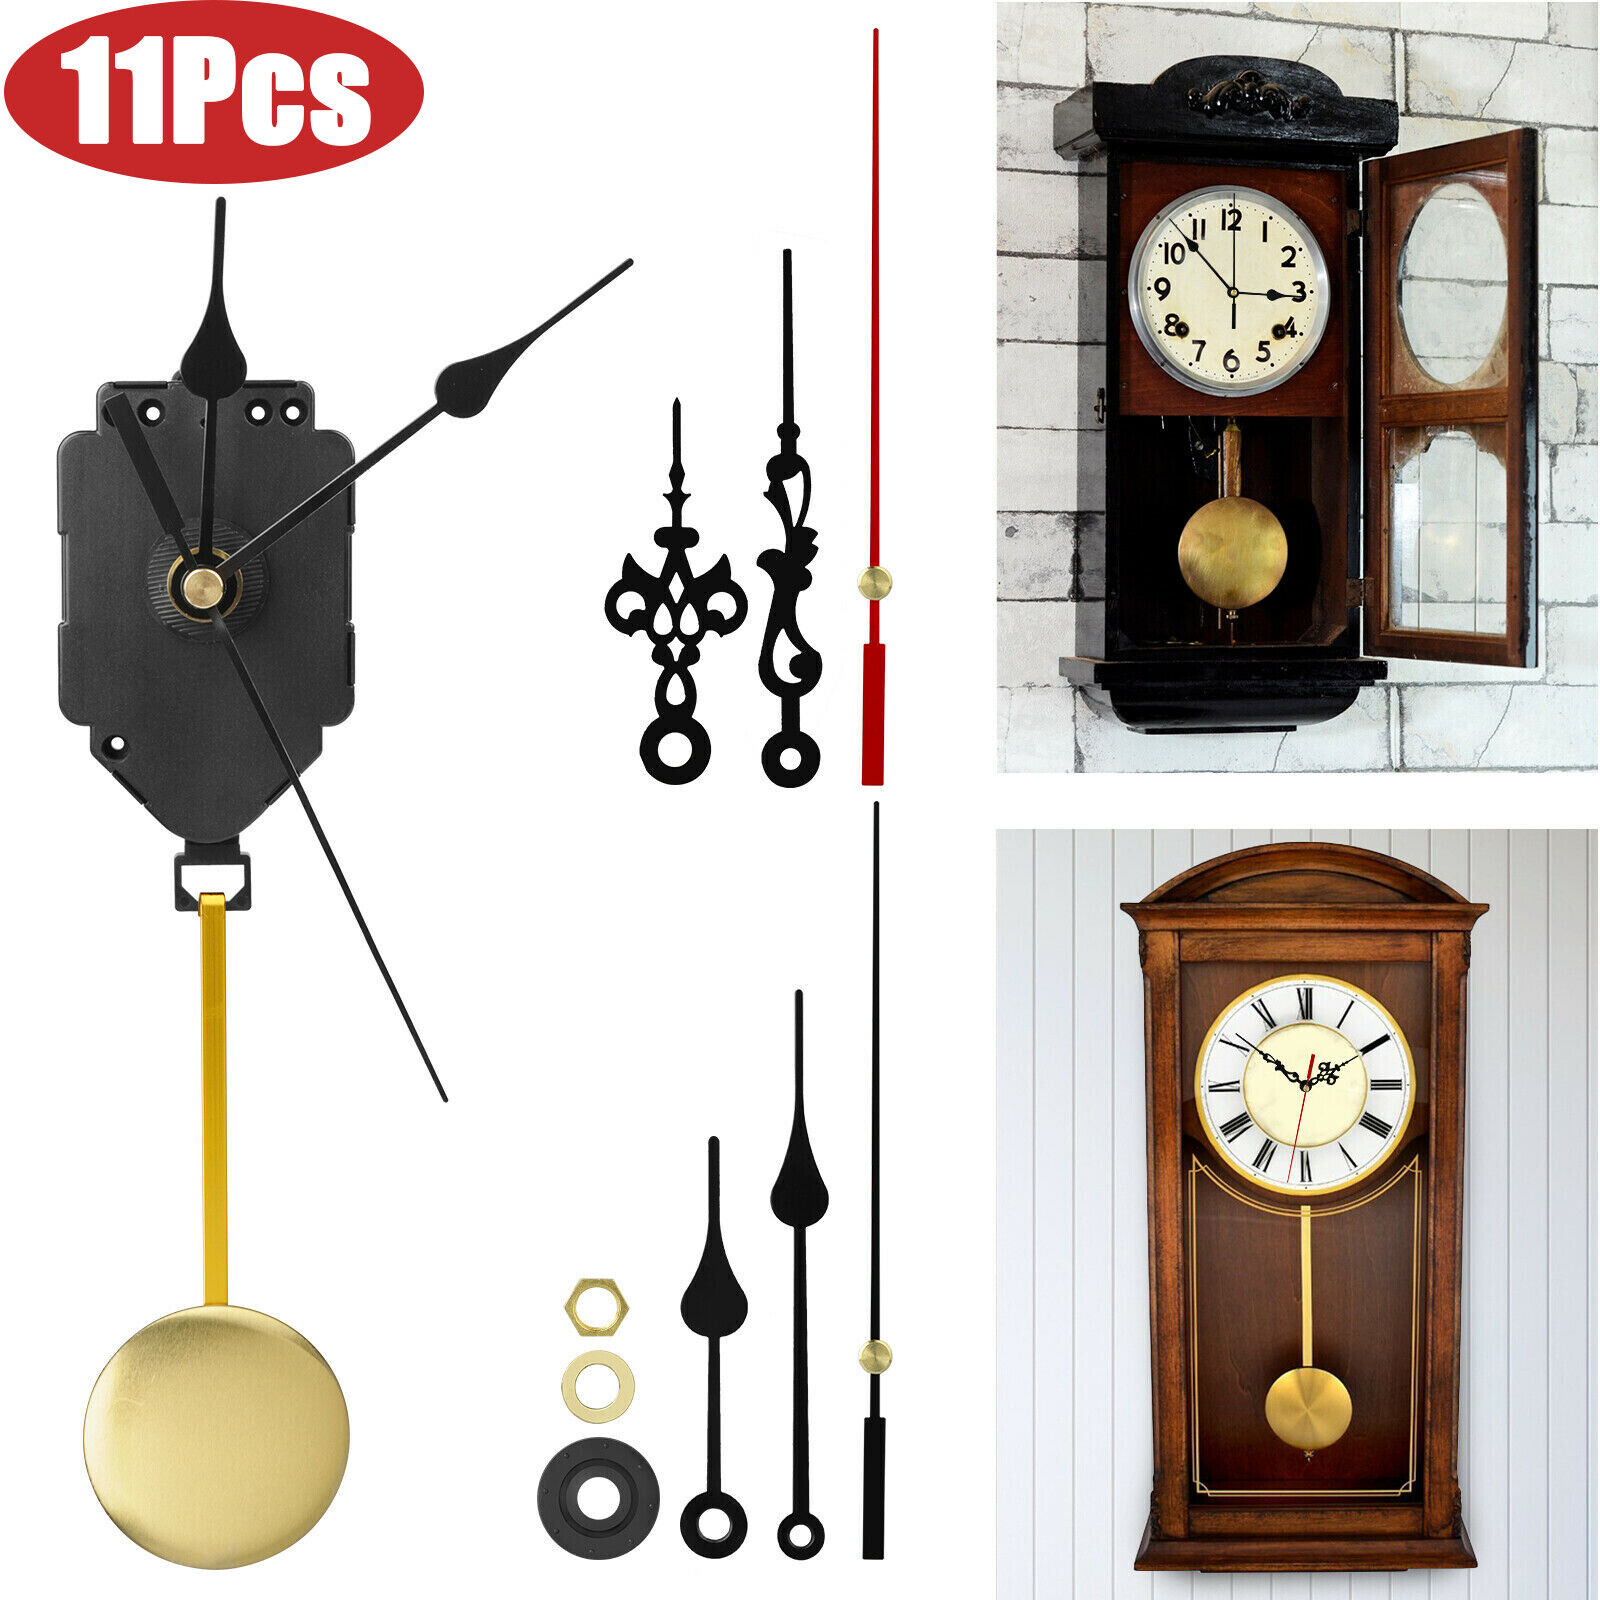 Quartz Wall Clock Pendulum Swing Movement Mechanism DIY Kit Chime Repair Parts